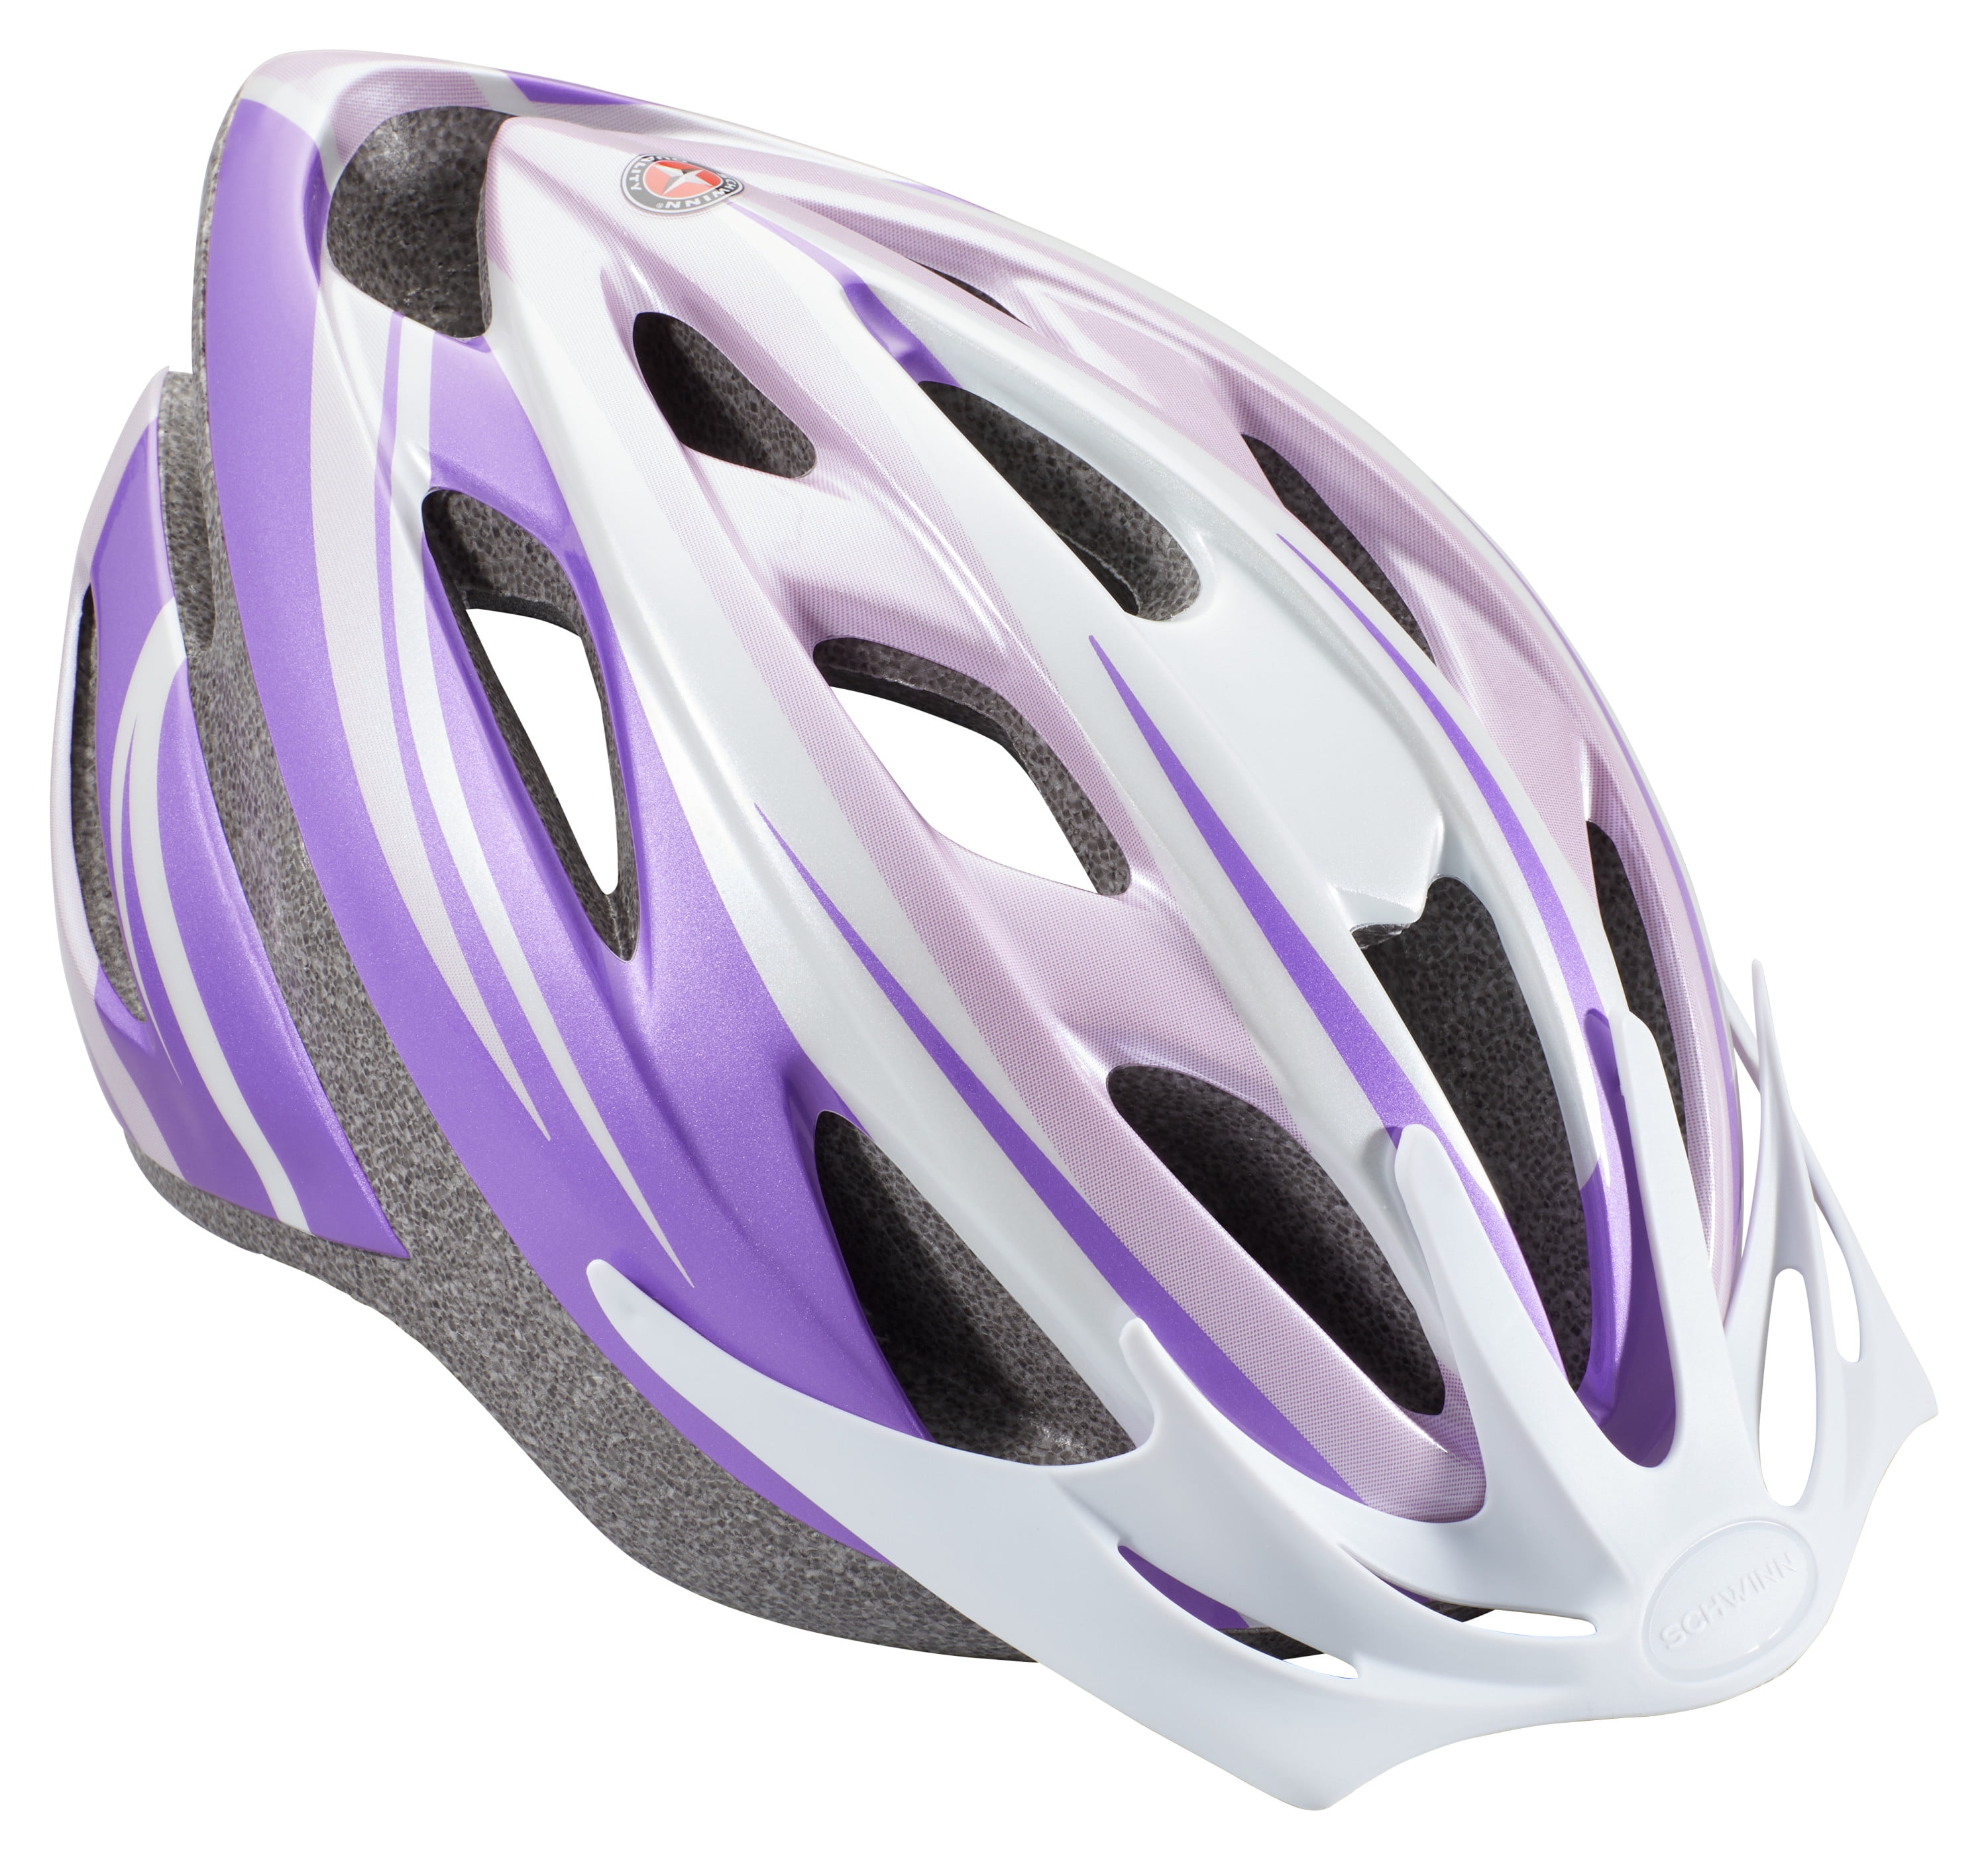 Adjustable Cycling Helmet Bicycle Adult Junior Shockproof Hat 58-52cm Grey 